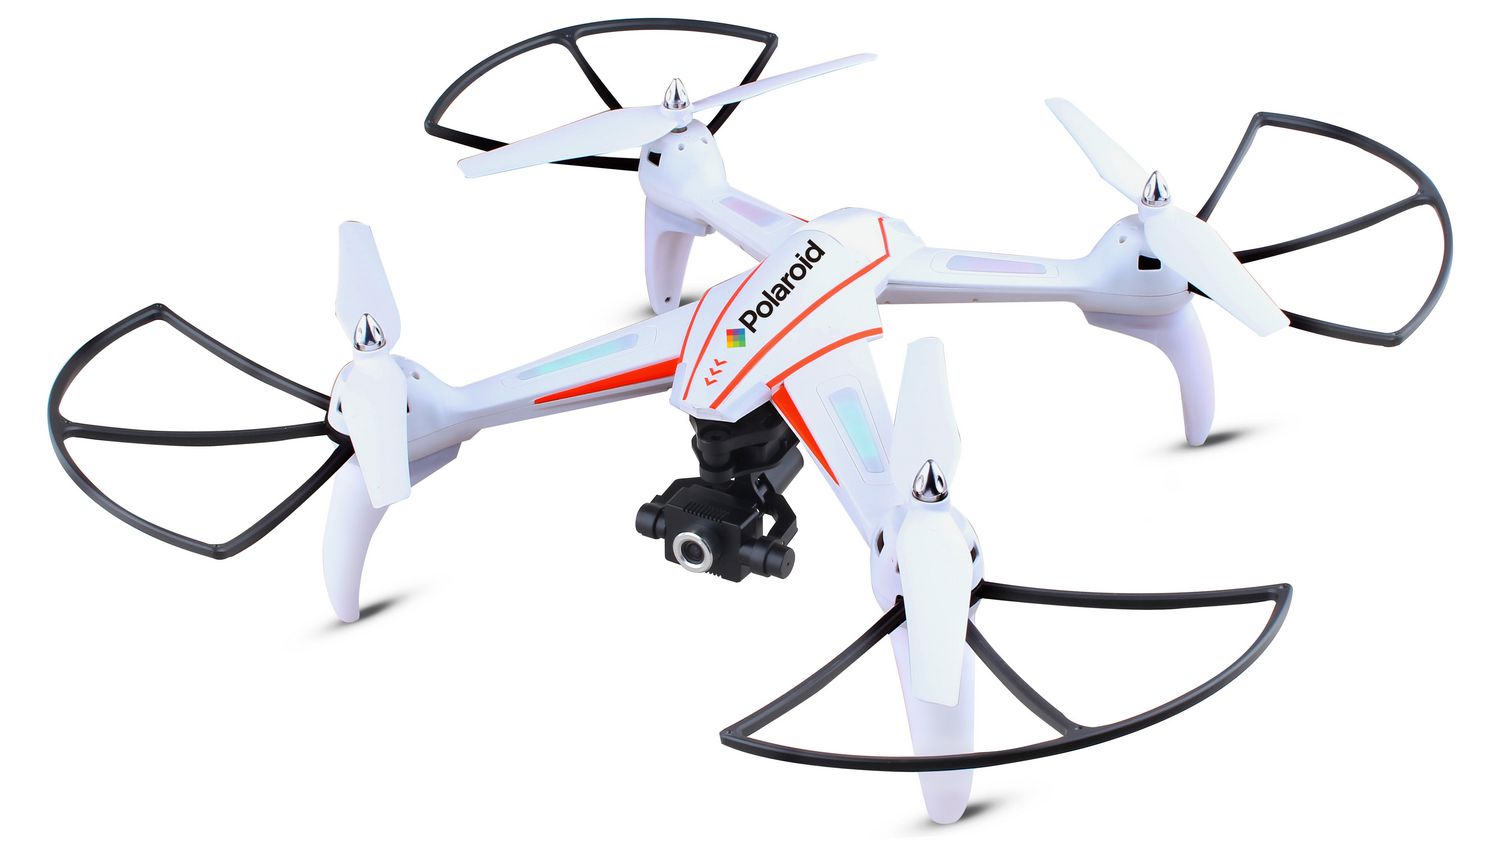 polaroid pl3100 drone review